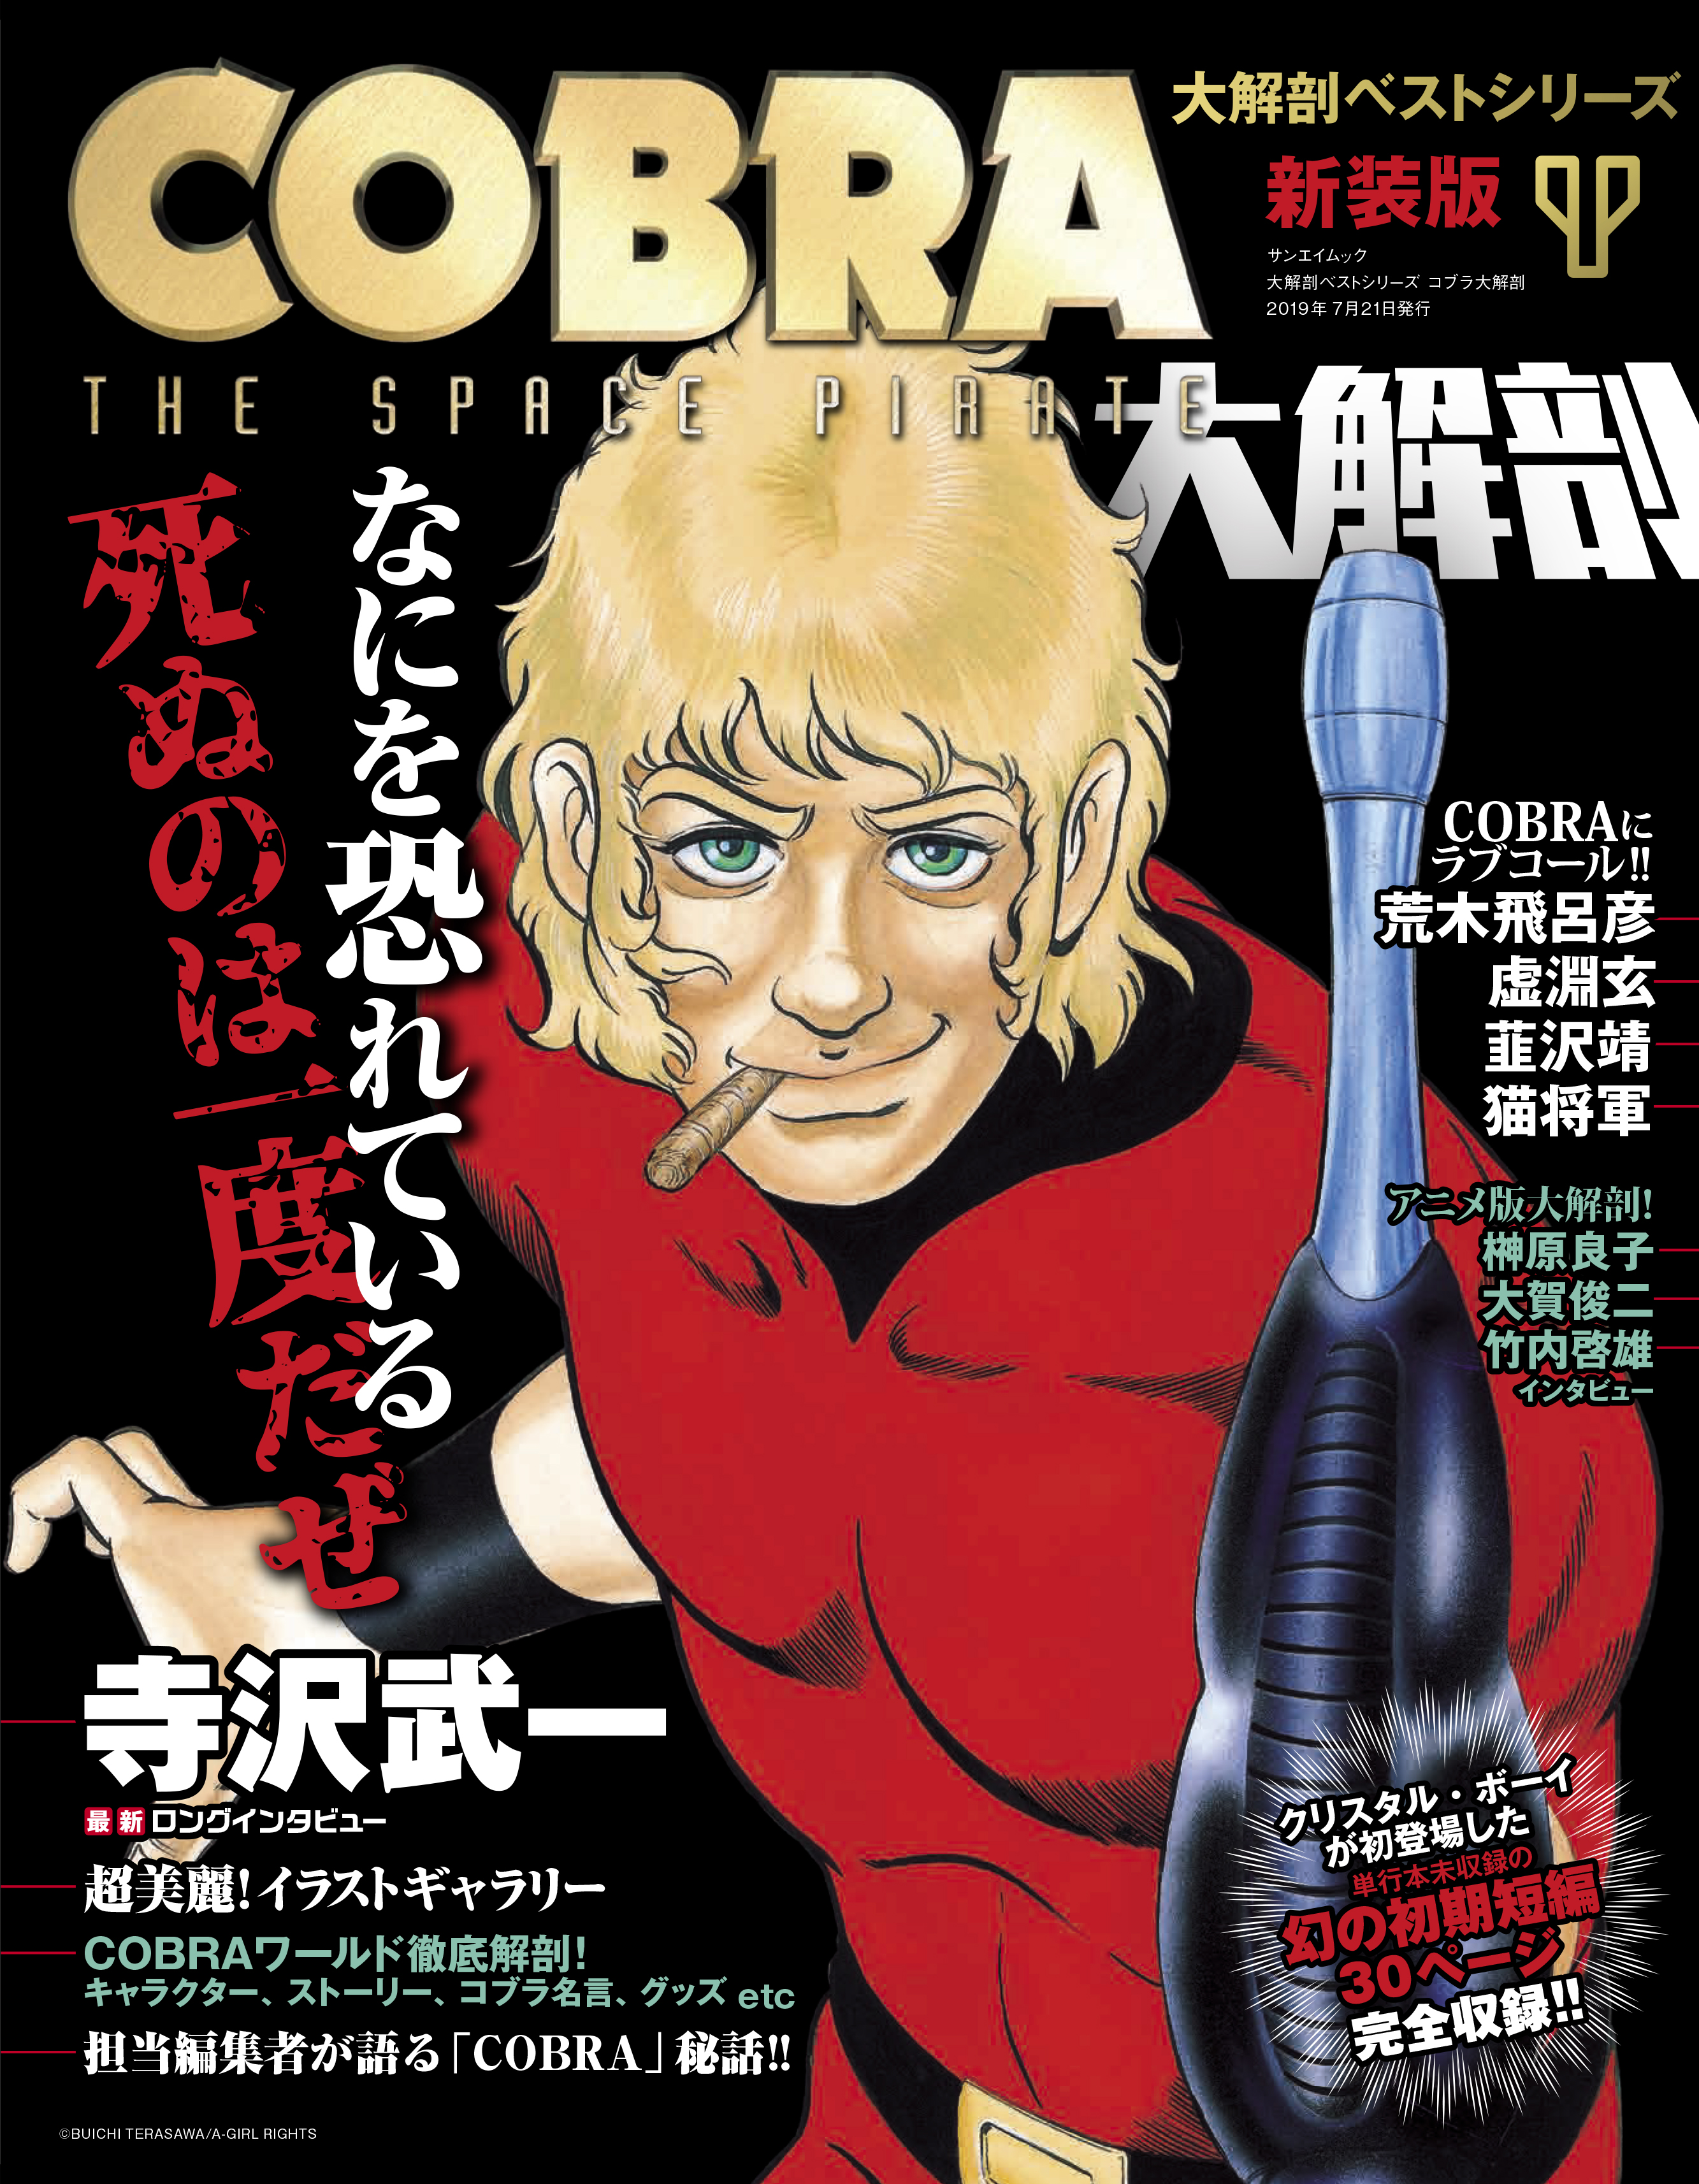 Cobra原画展 三栄 新装版 Cobra 大解剖 発売 墓場の画廊